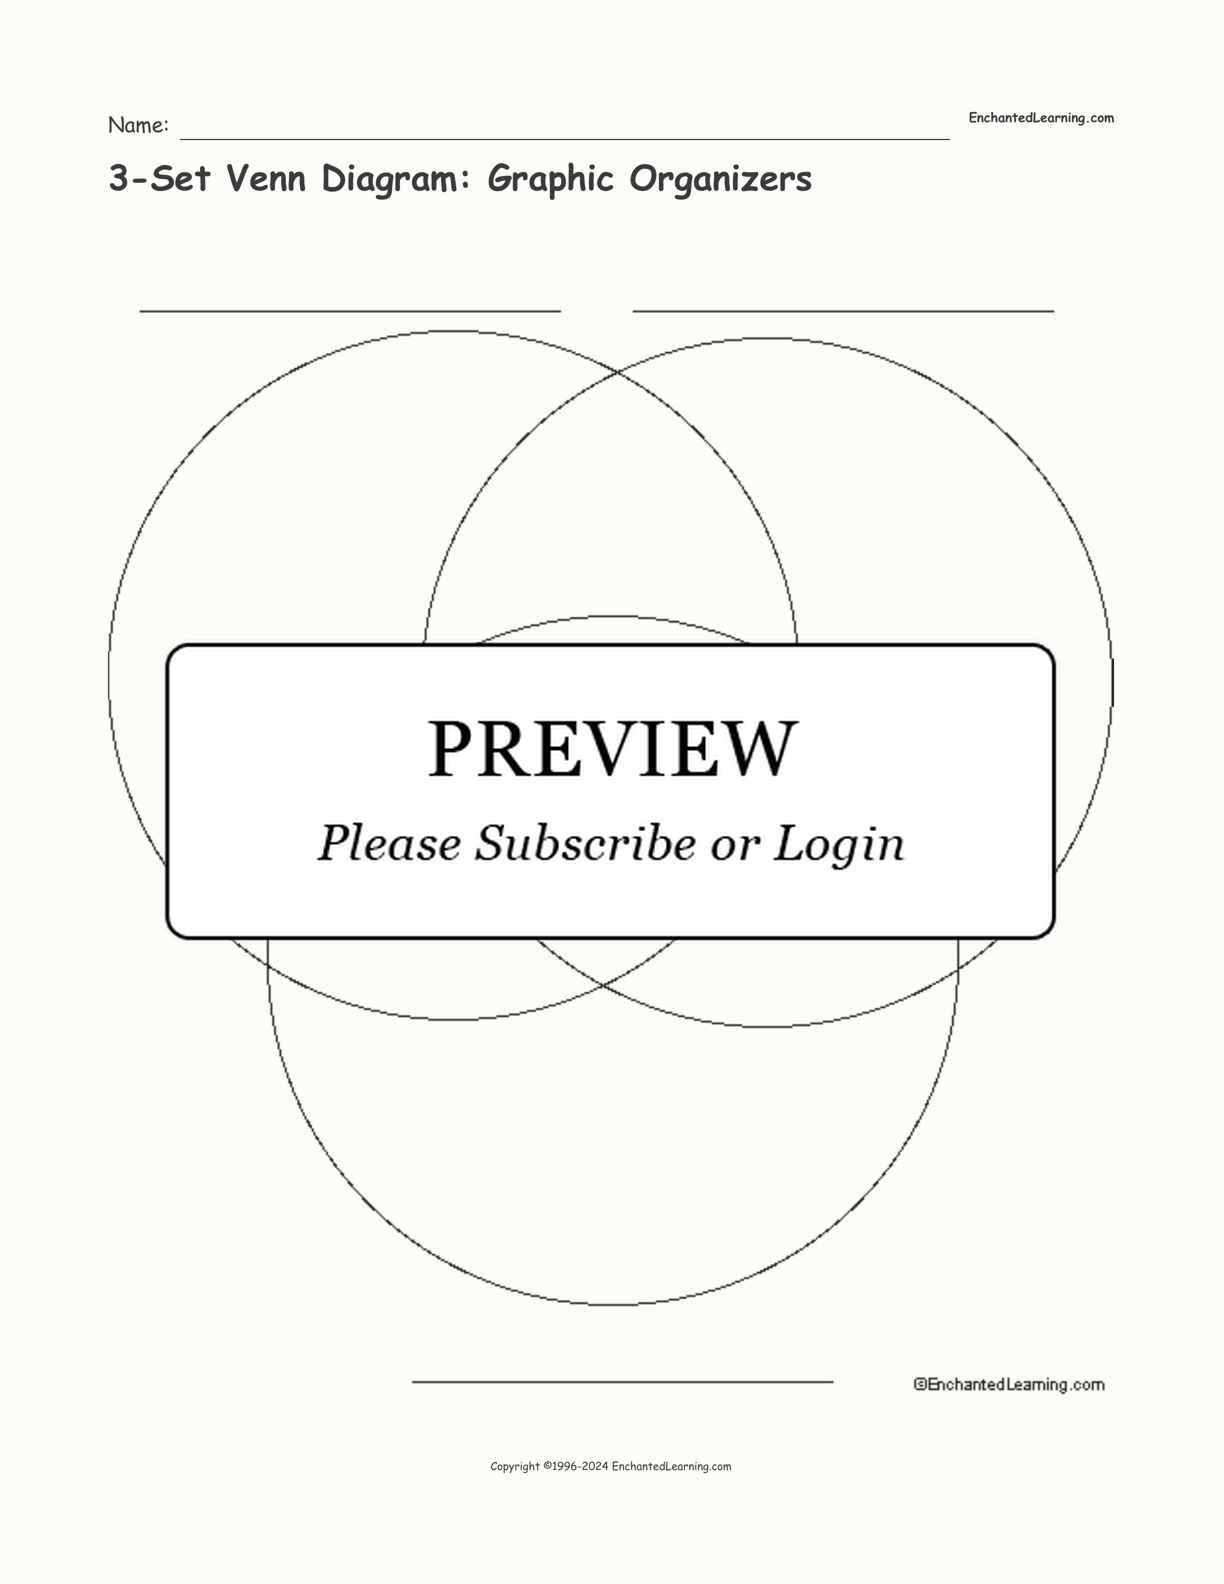 3-Set Venn Diagram: Graphic Organizers interactive printout page 1